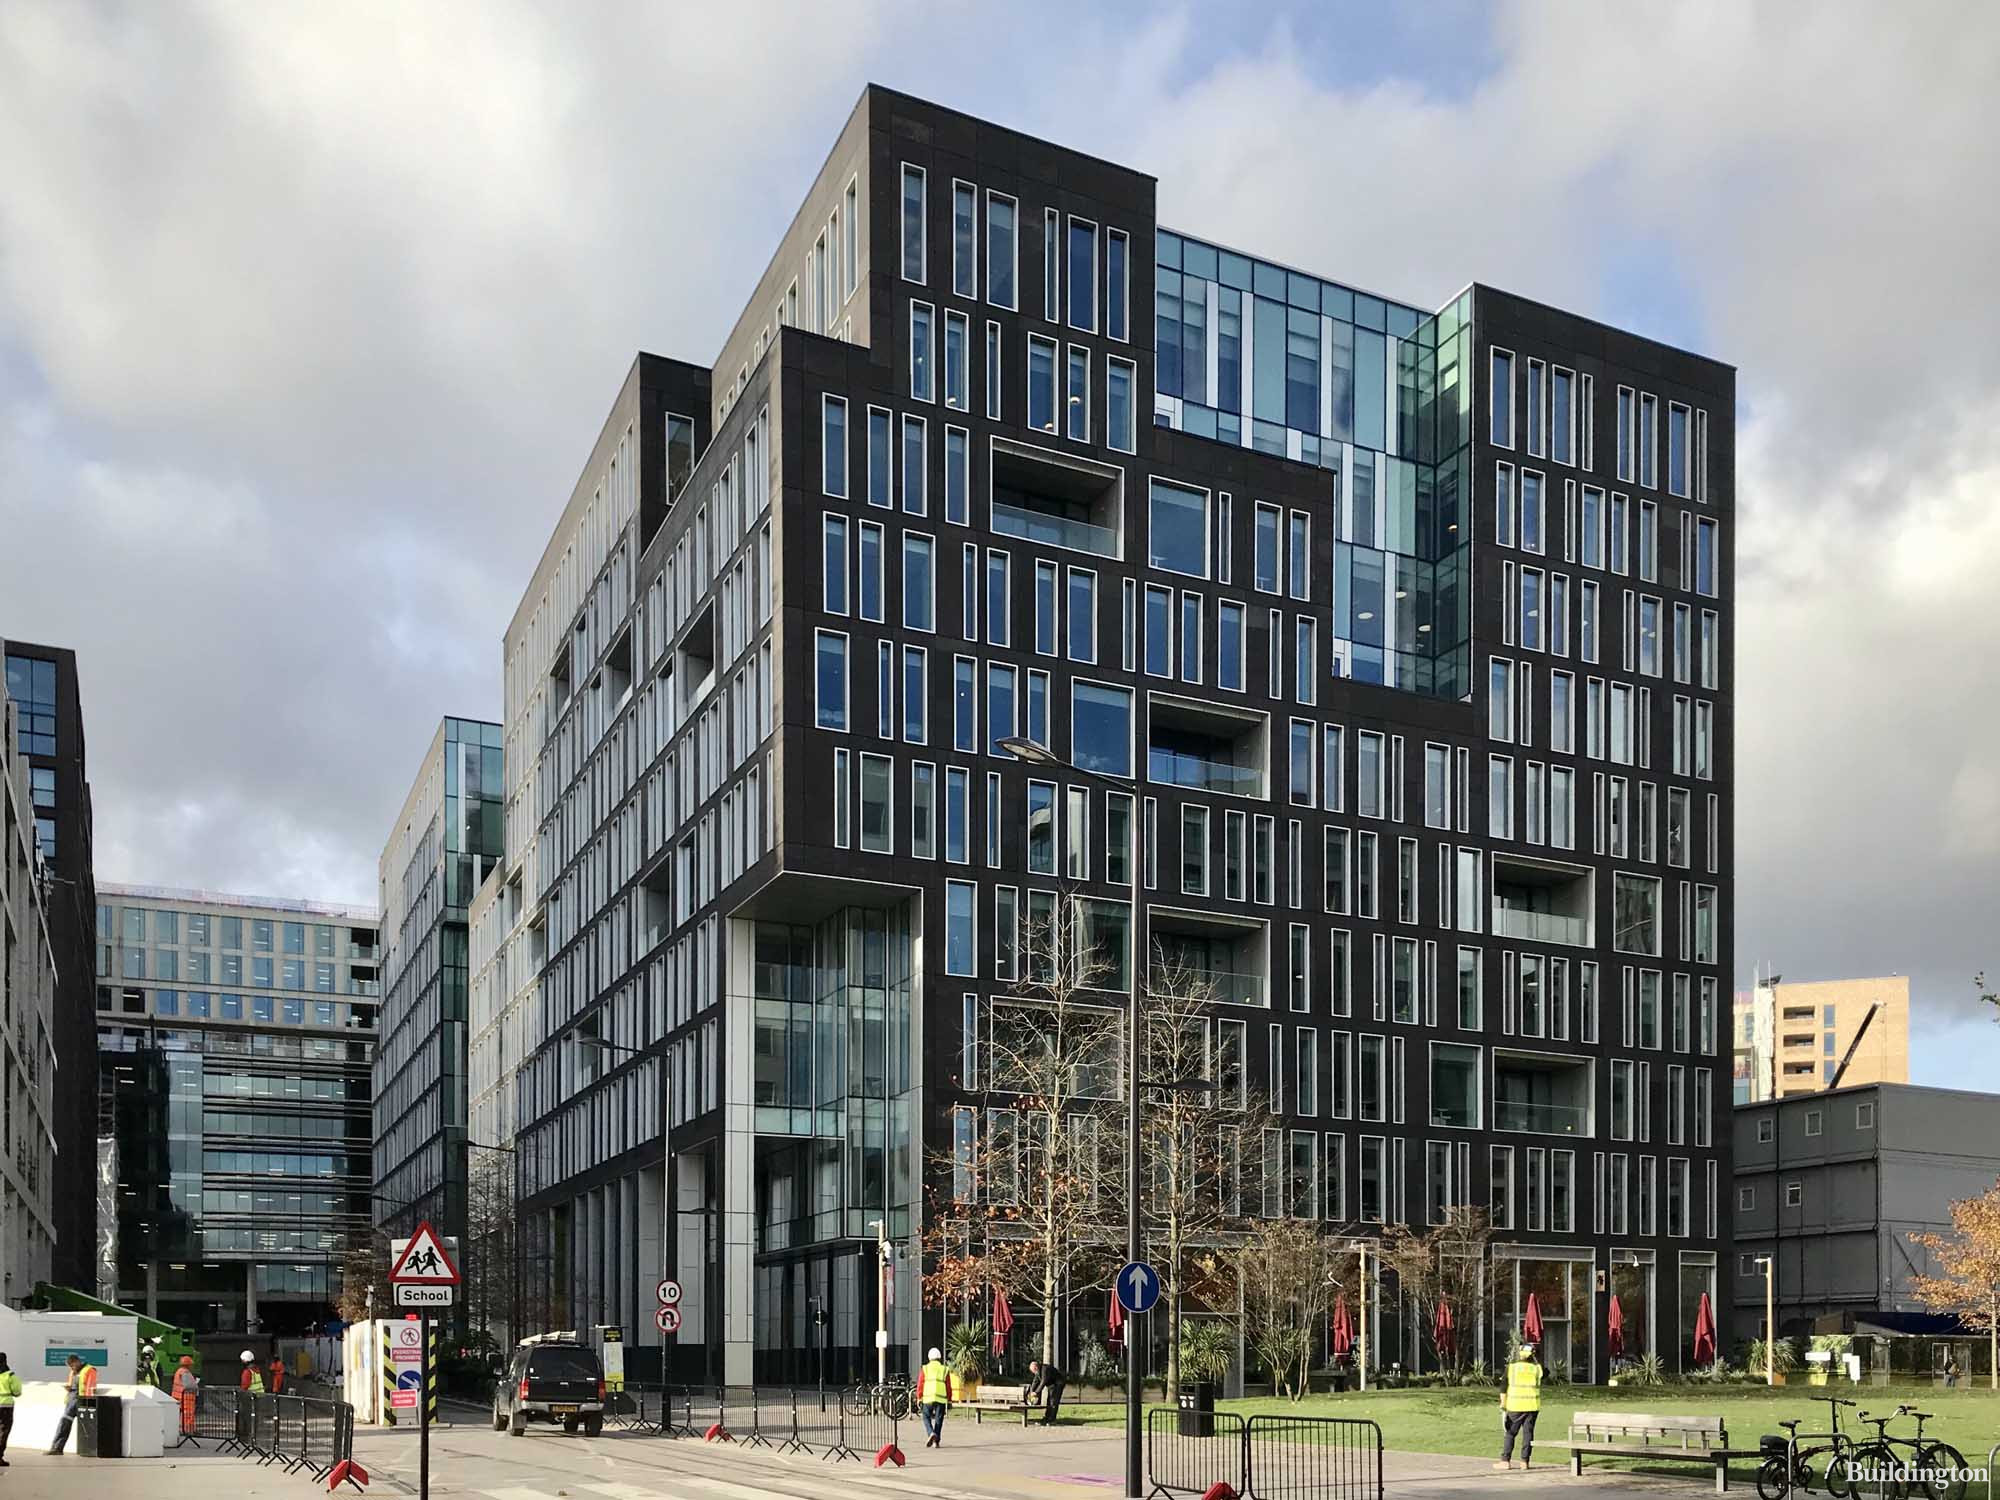 S2 Handyside office building designed by Mossessian architects in King's Cross, London N1C.